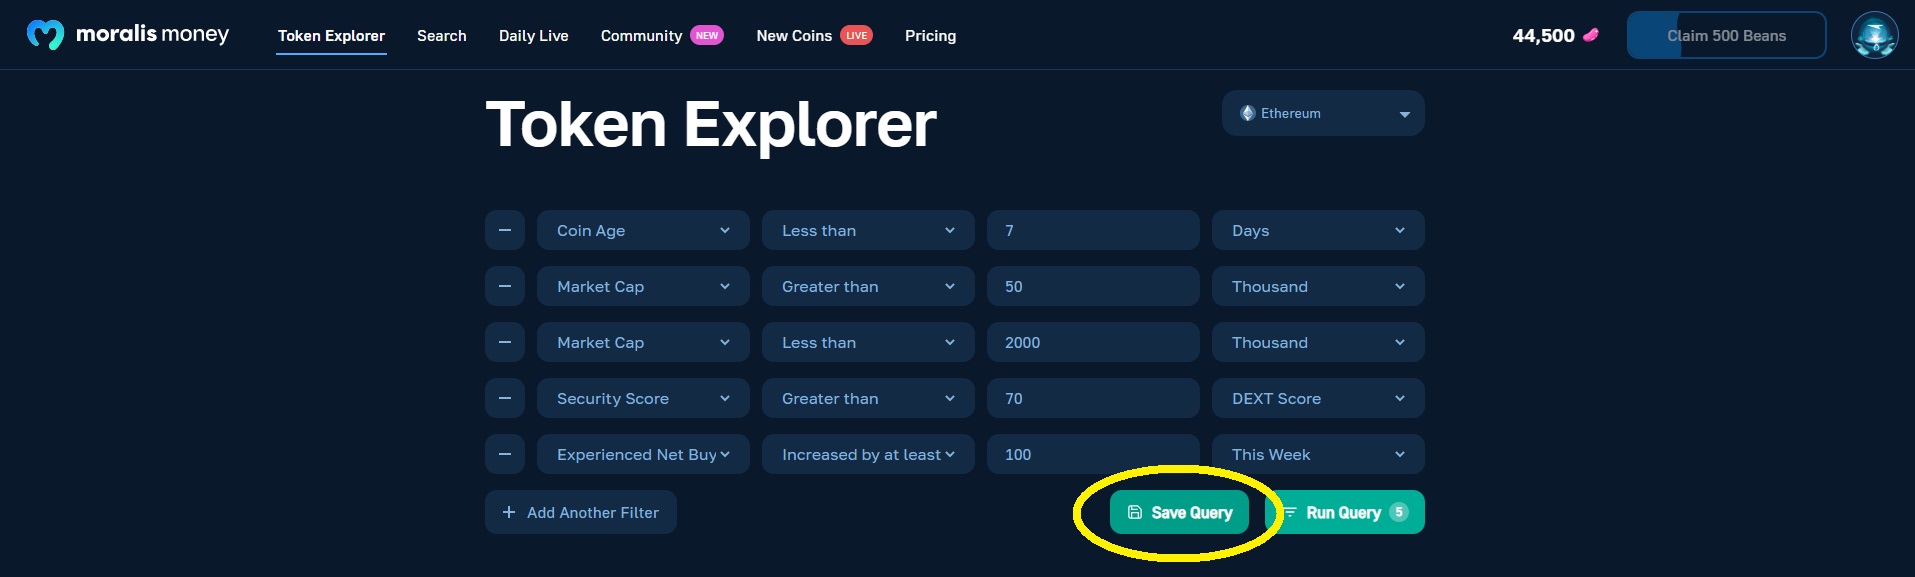 Save-winning-Token-Explorer-queries